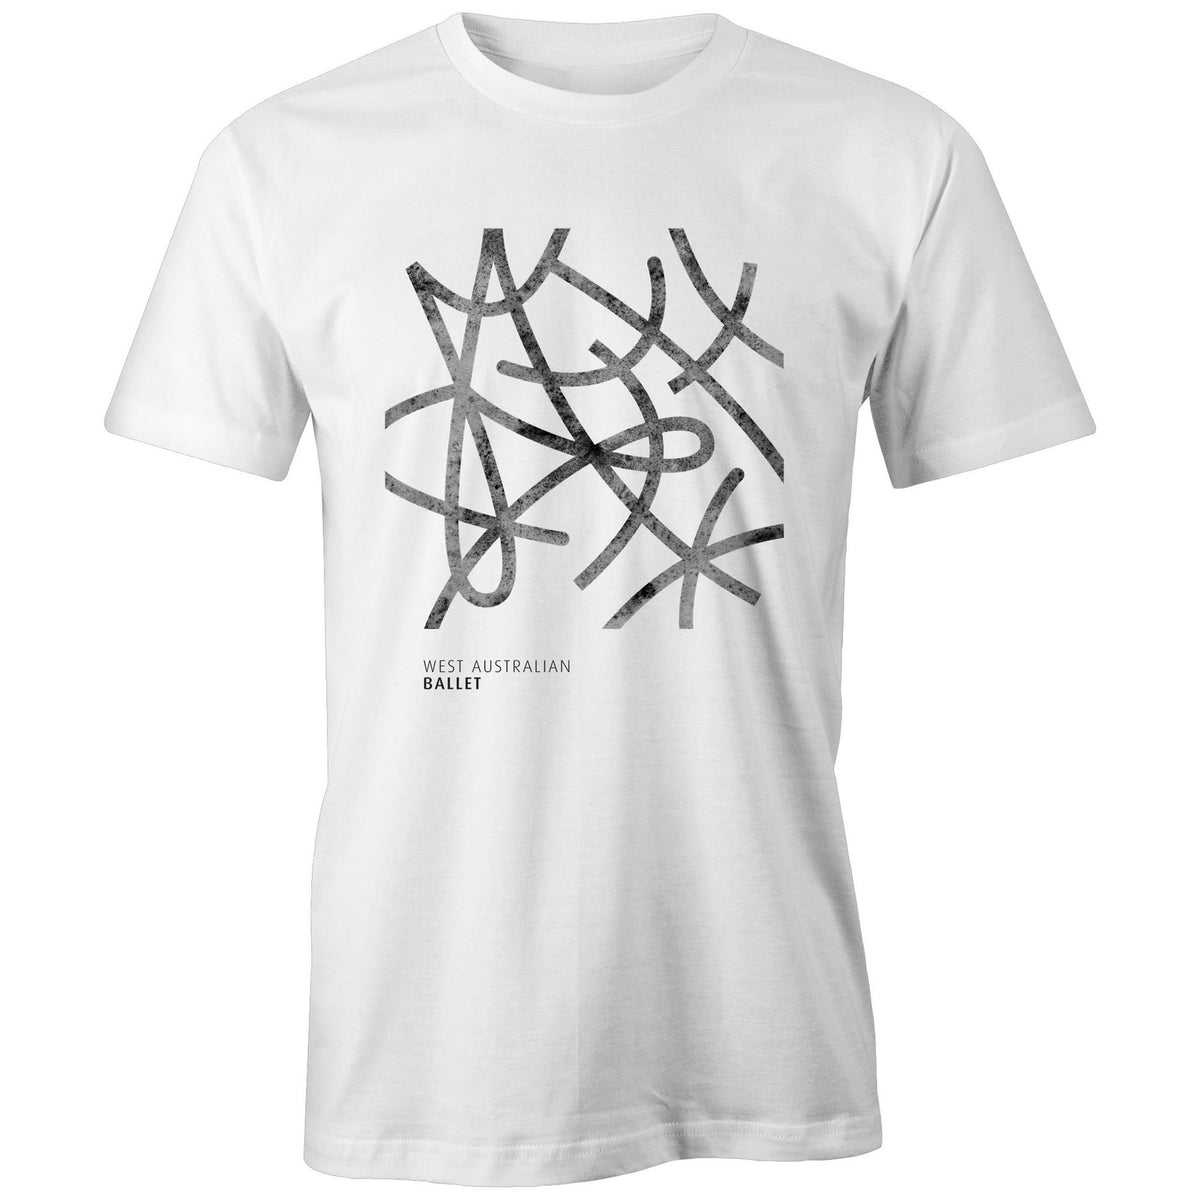 Unisex Adult Charcoal Logo T-Shirt